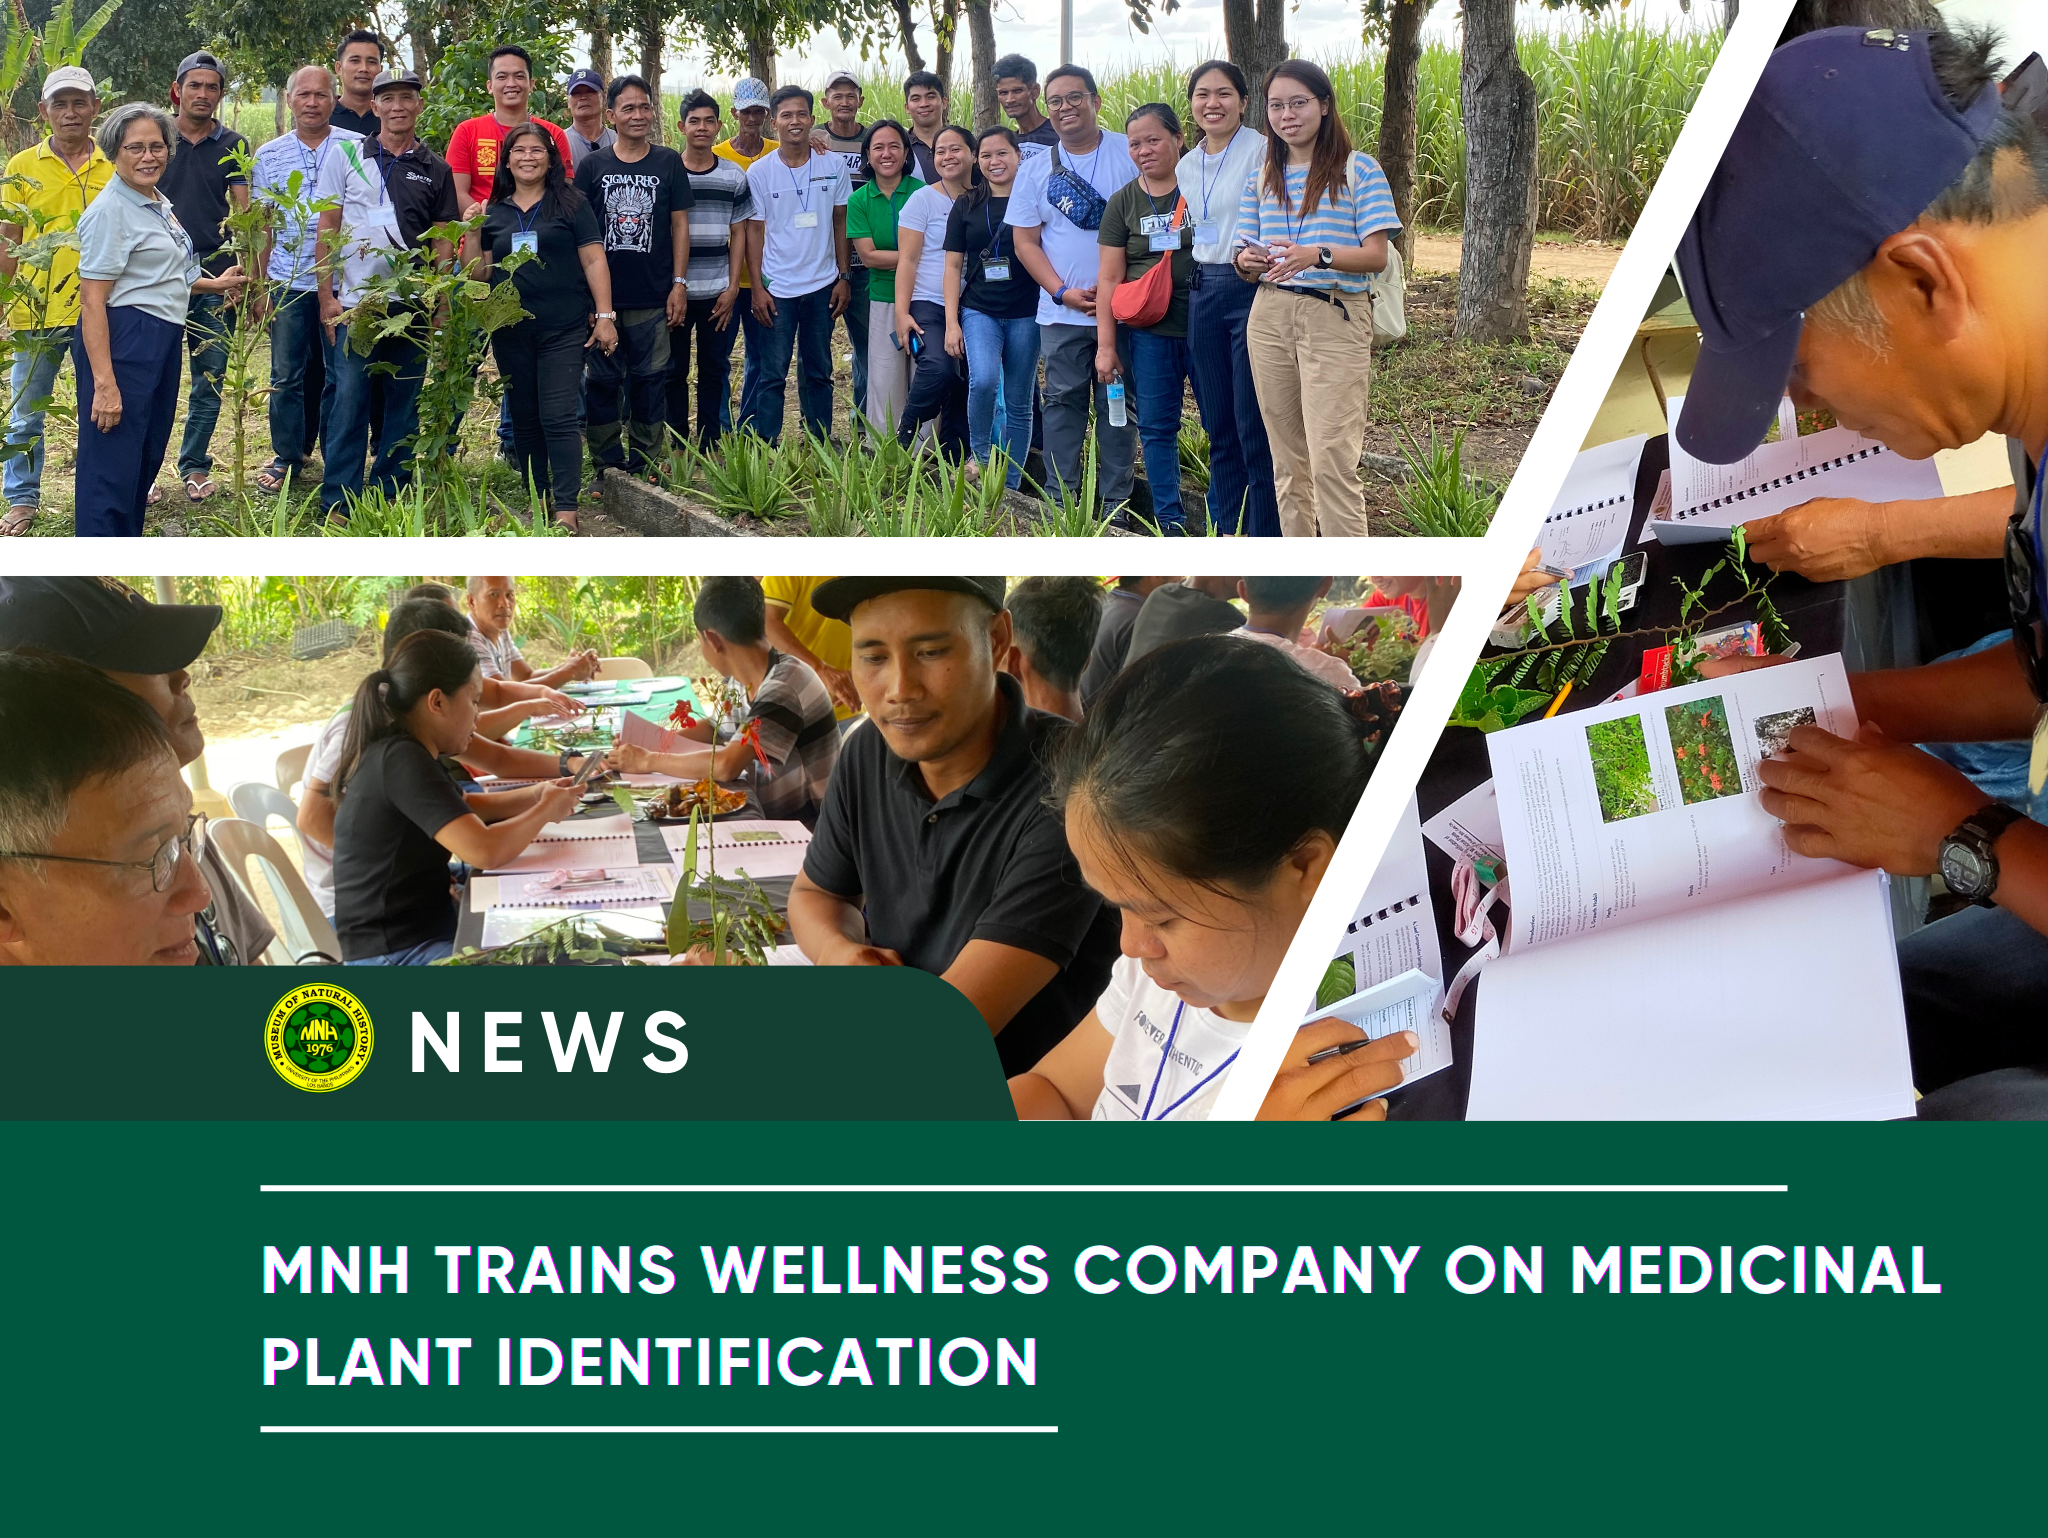 MNH trains wellness company on medicinal plant identification